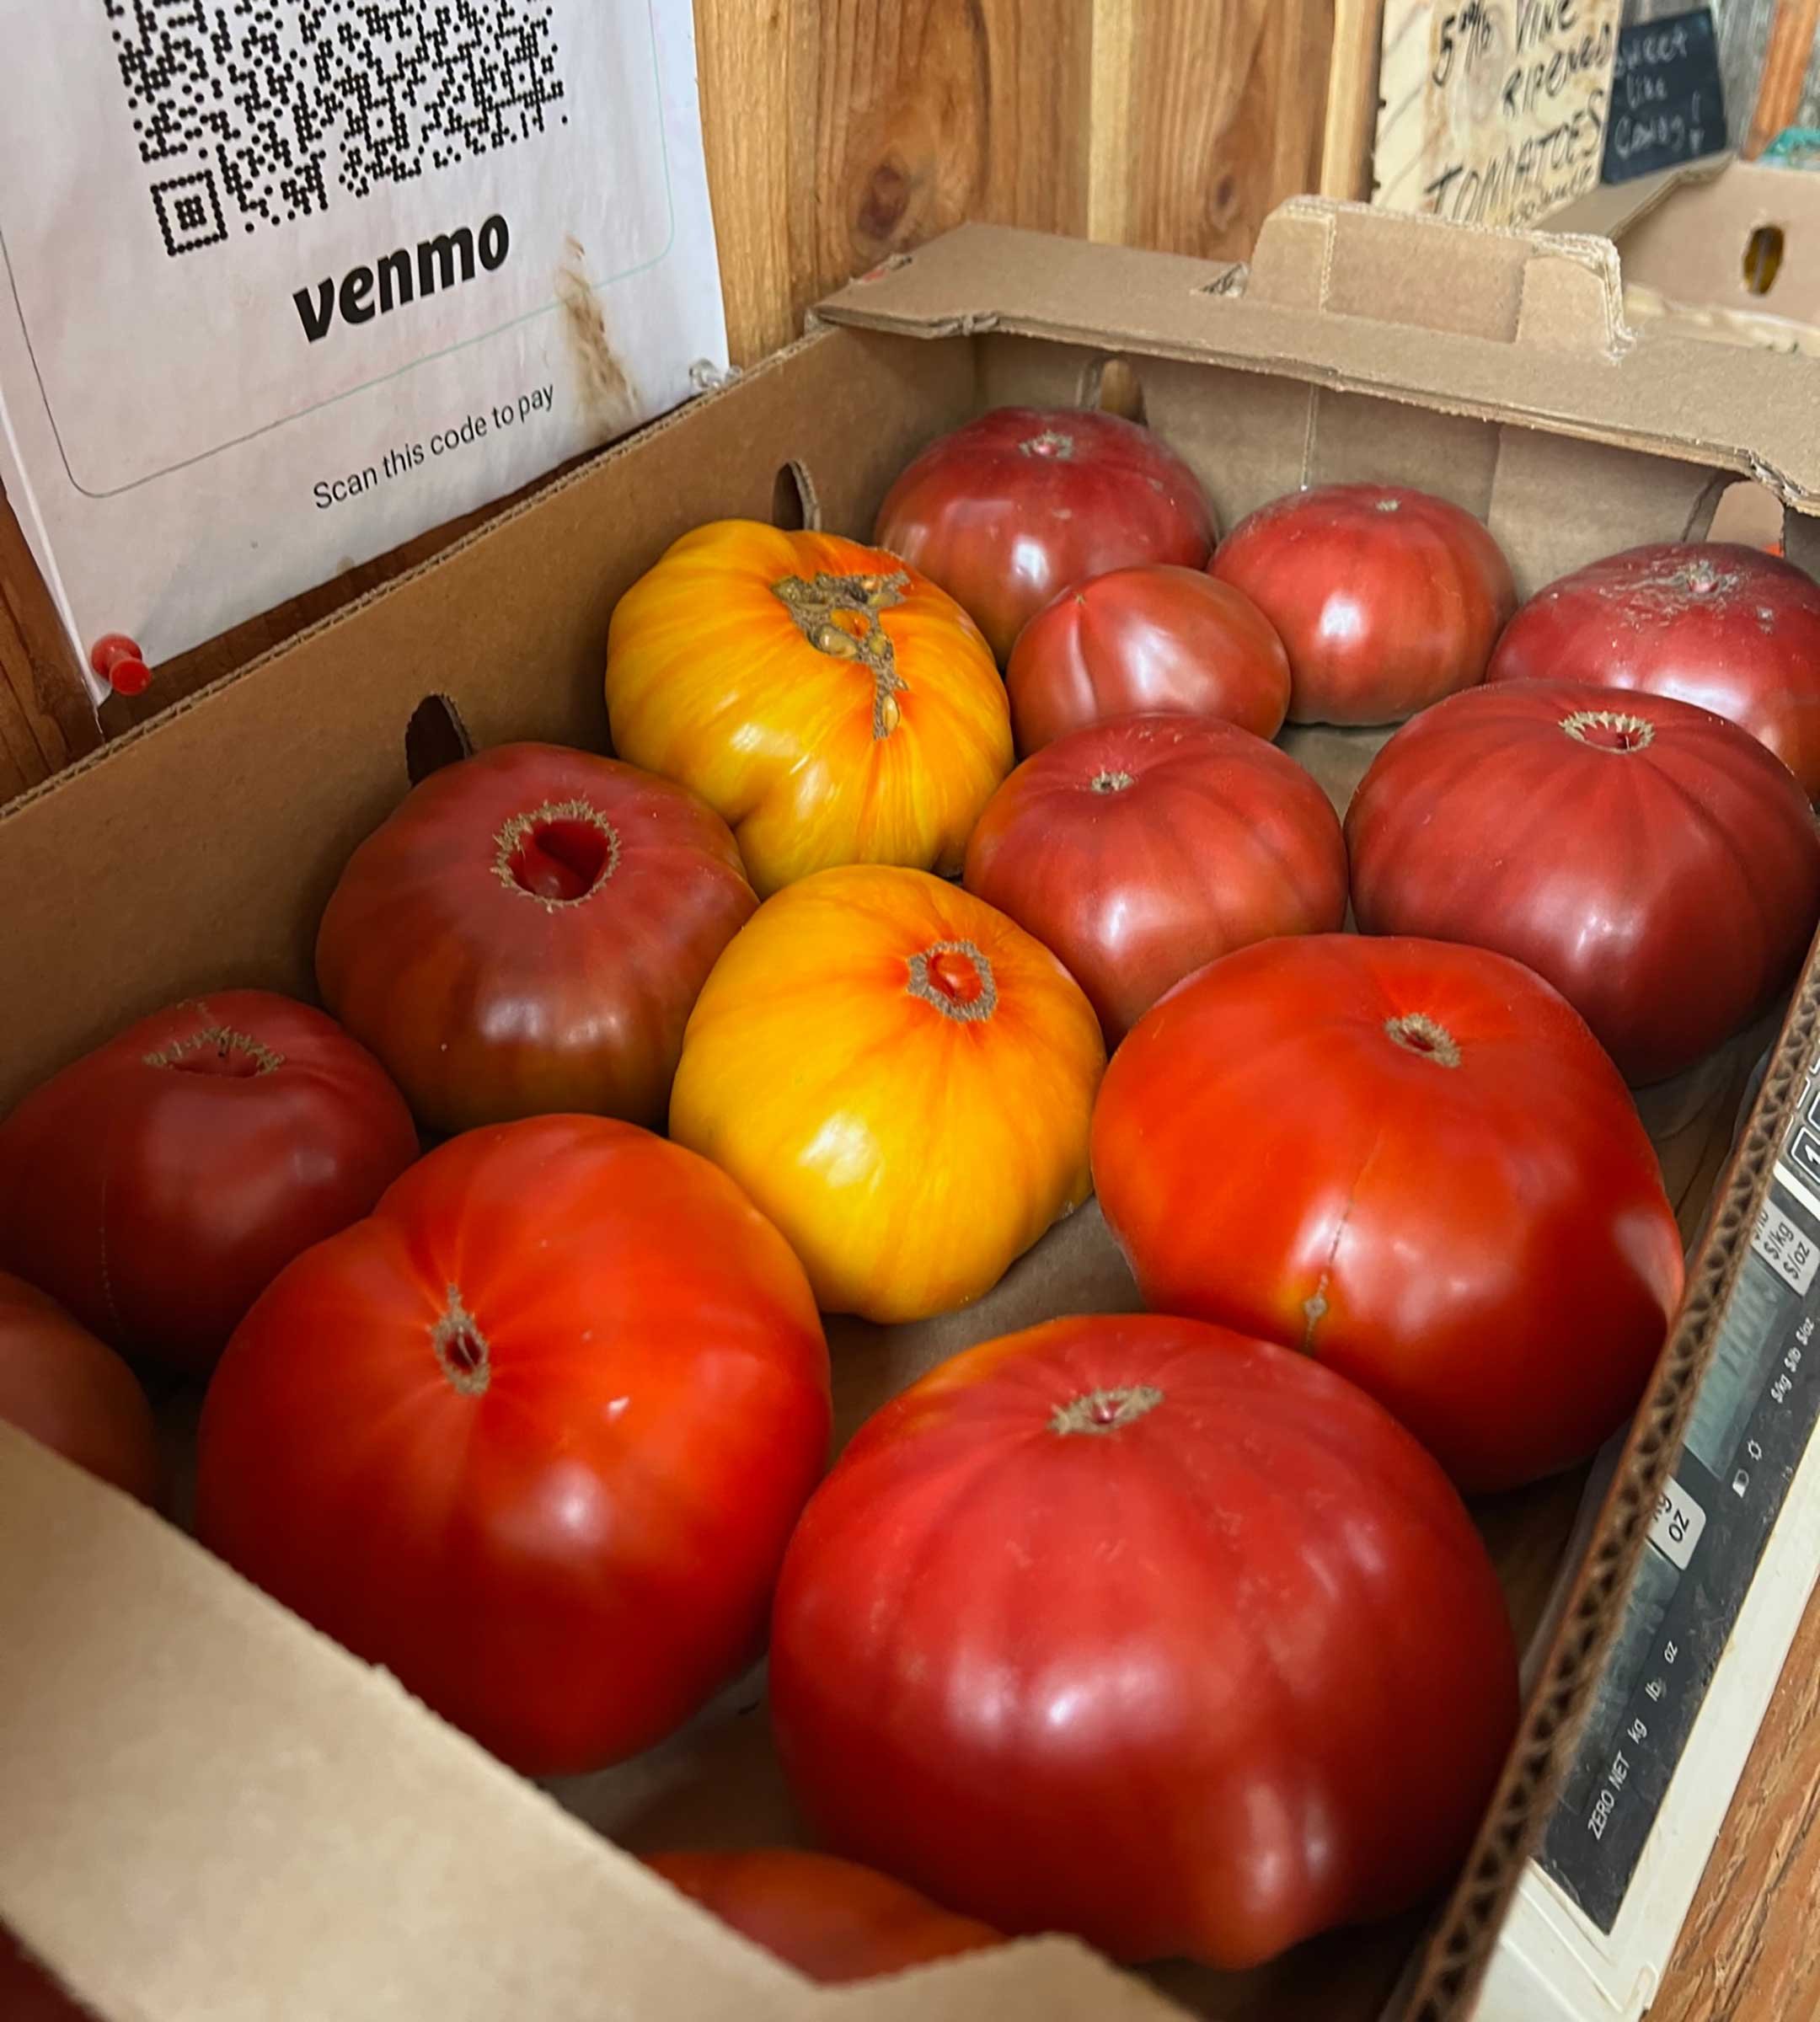 Big Mesa tomatoes at the honor stand